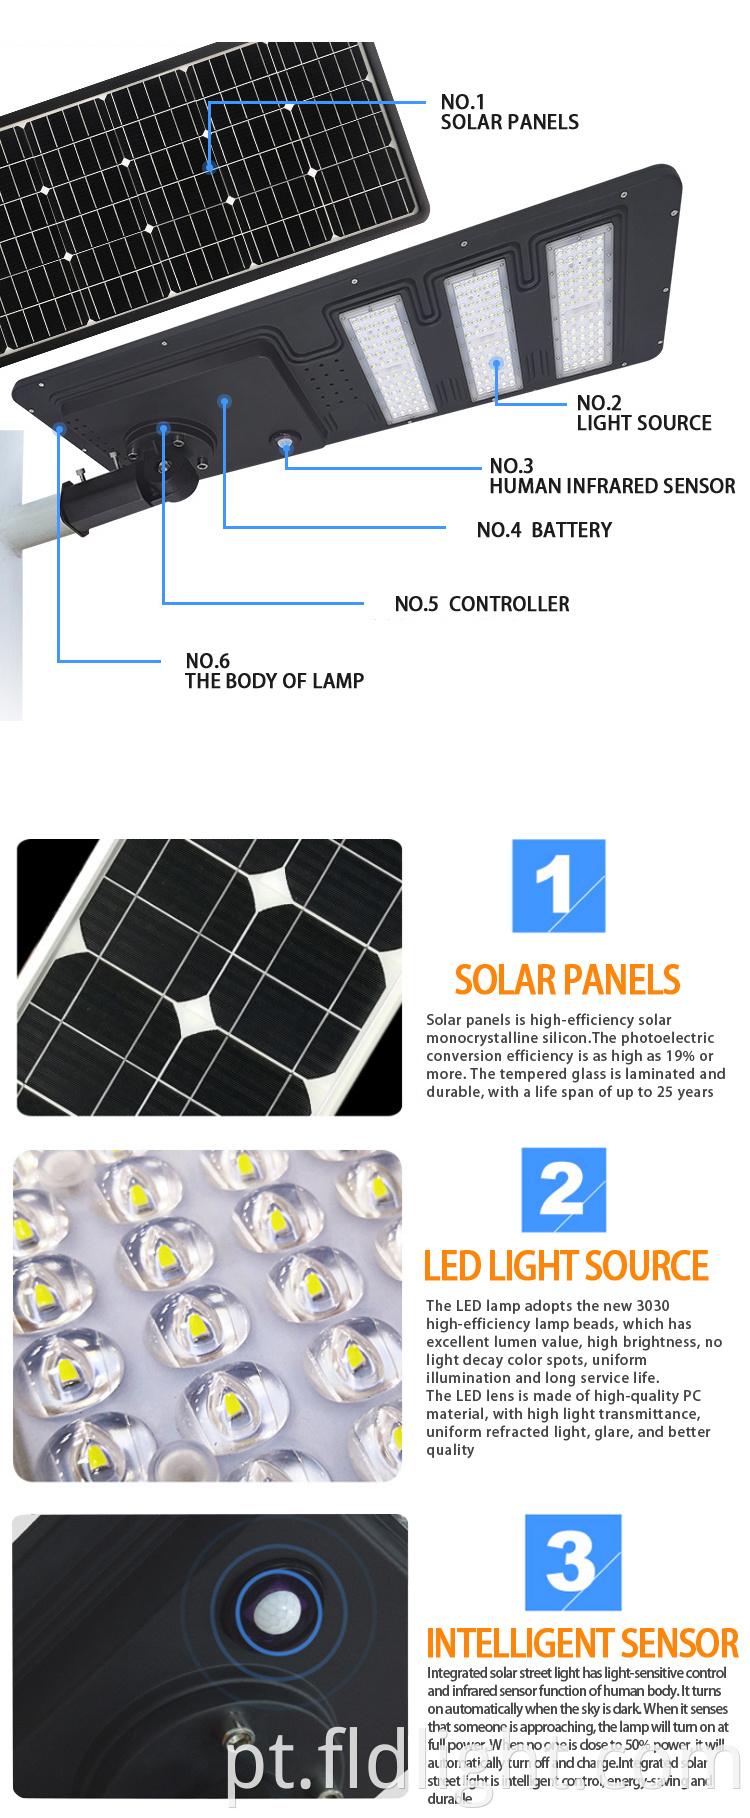  3030 led chips integrated solar lights